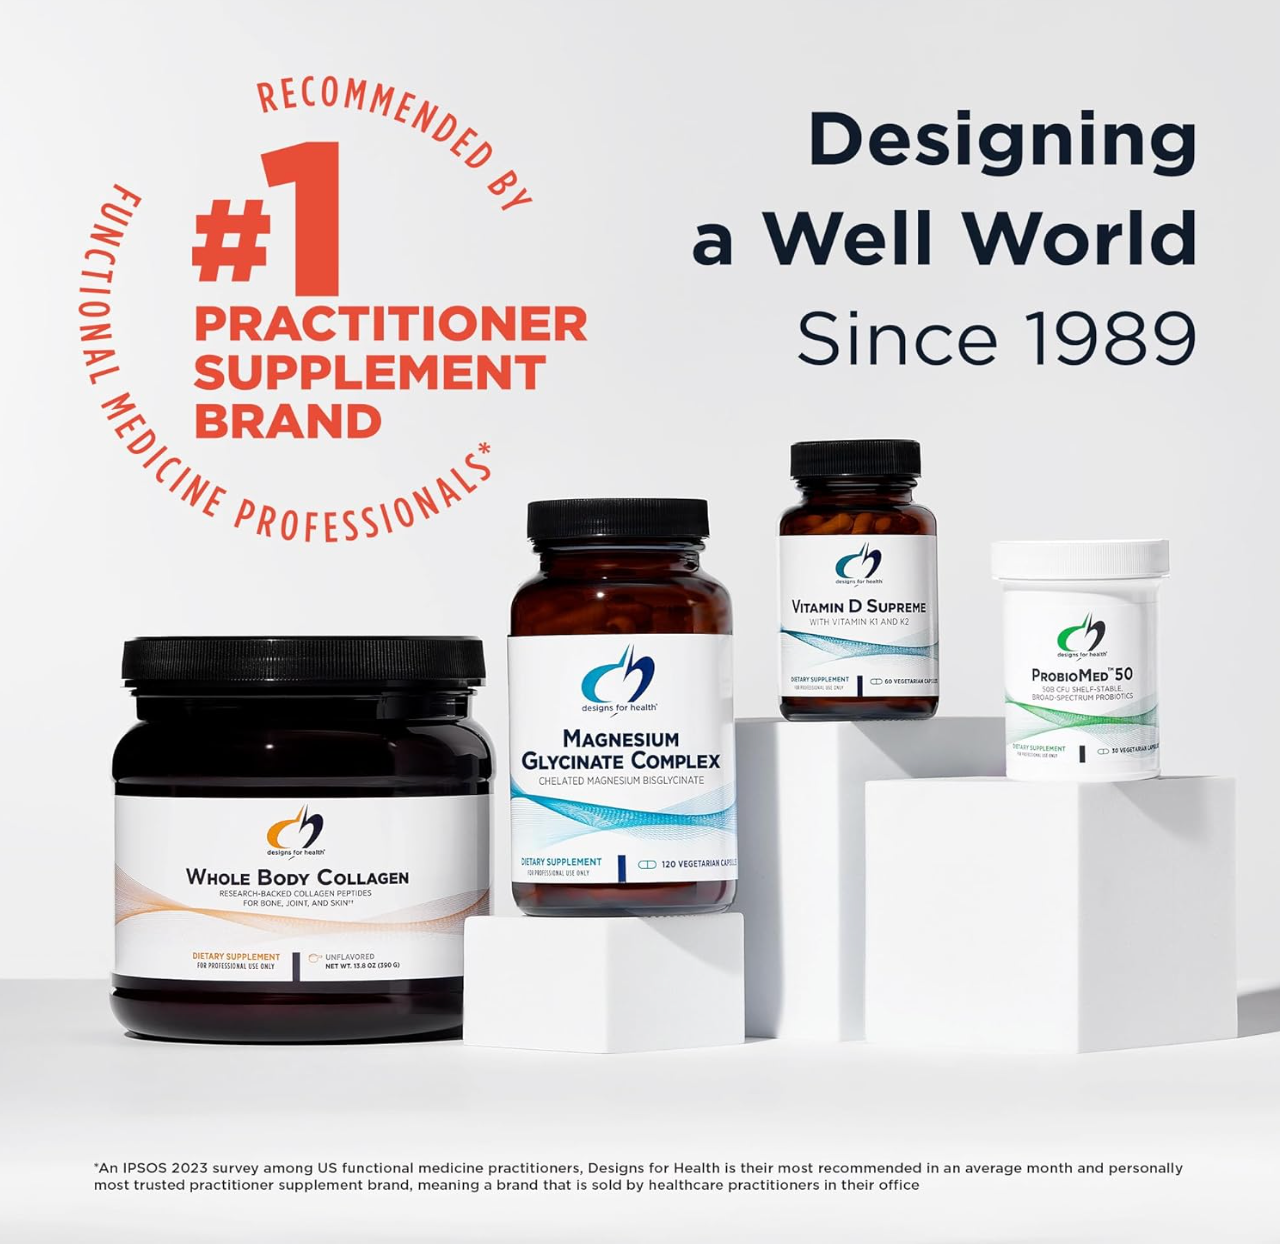 Designs for Health WheyCool Protein Powder